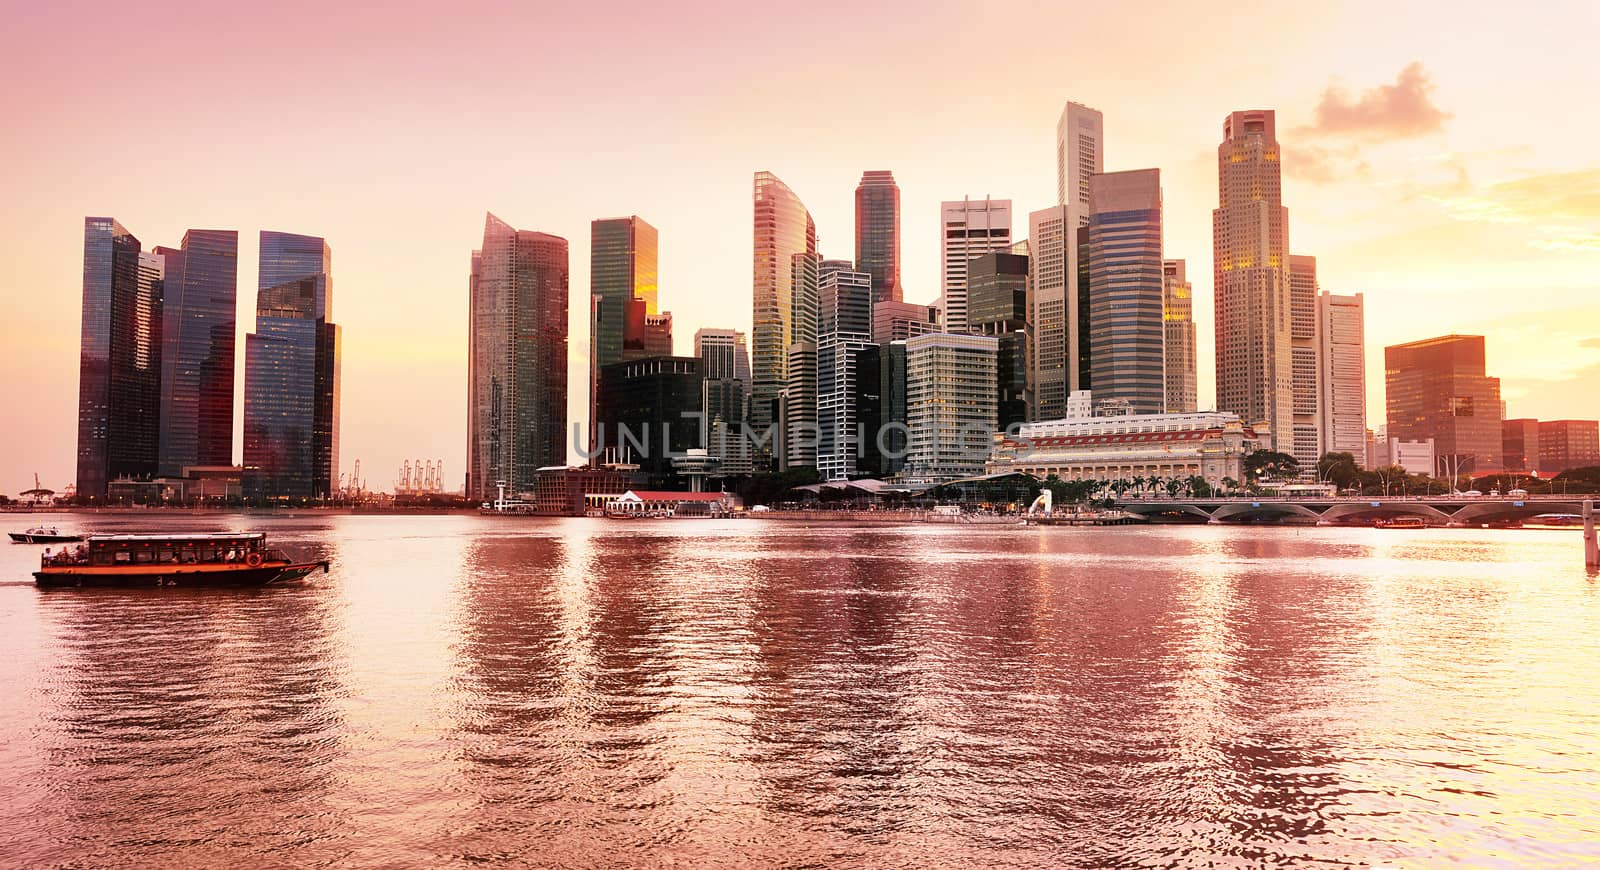 Panramic view of Singapore downtown at a beautiful sunset 